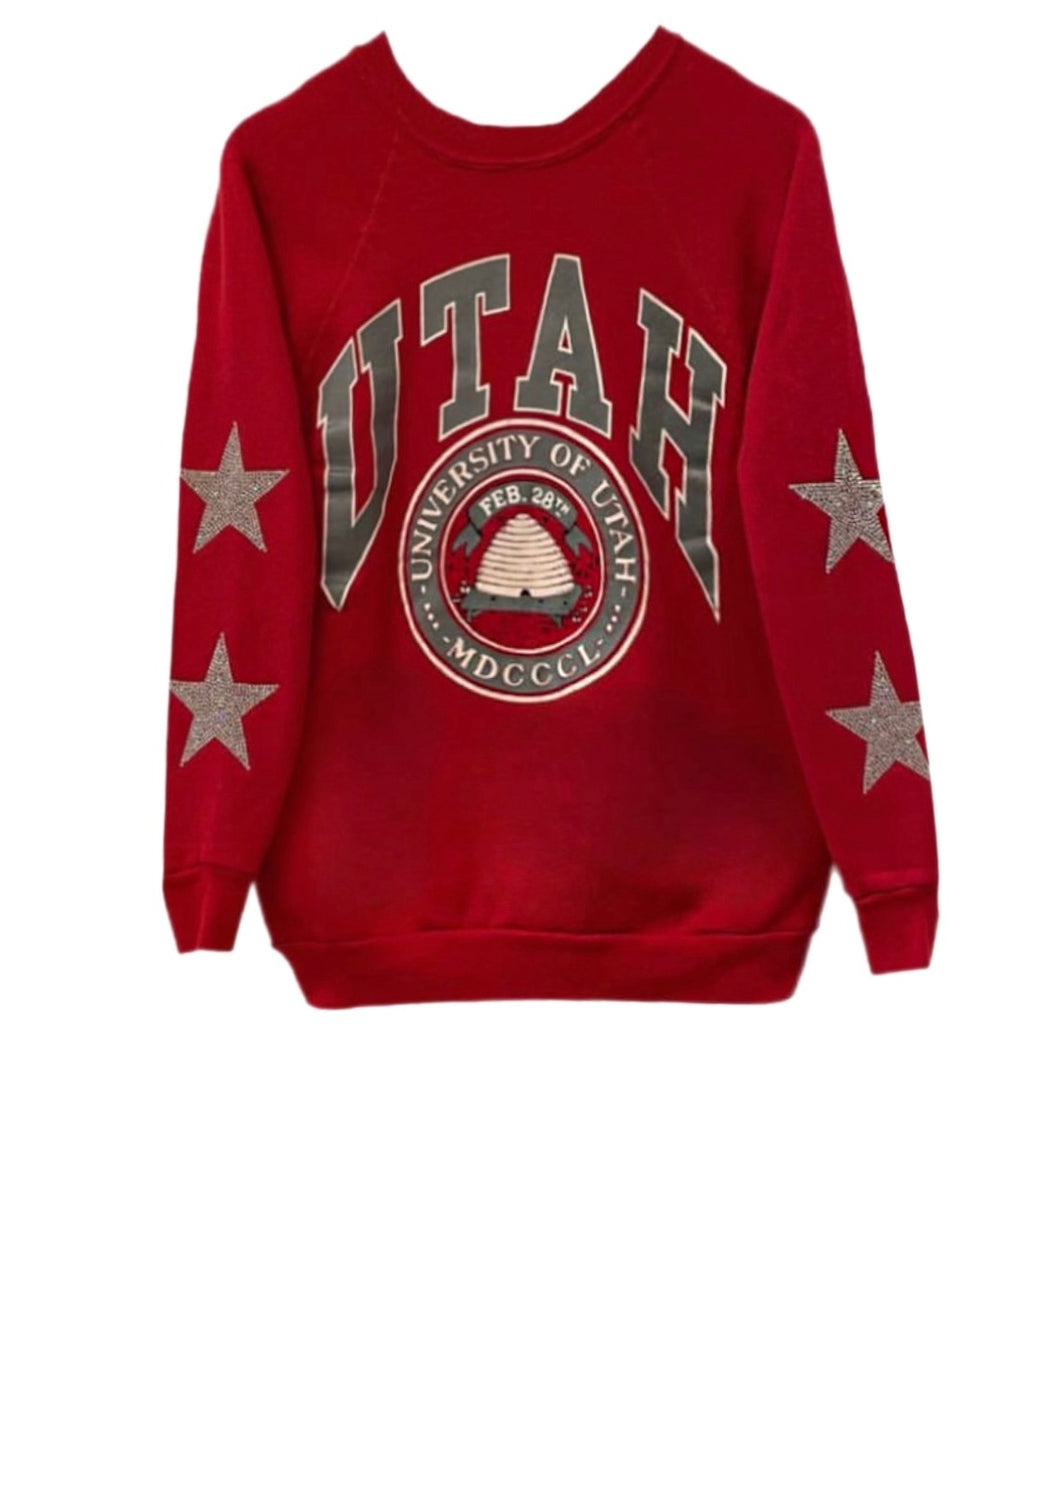 University of Utah, One of a KIND Vintage Sweatshirt with Crystal Star Design